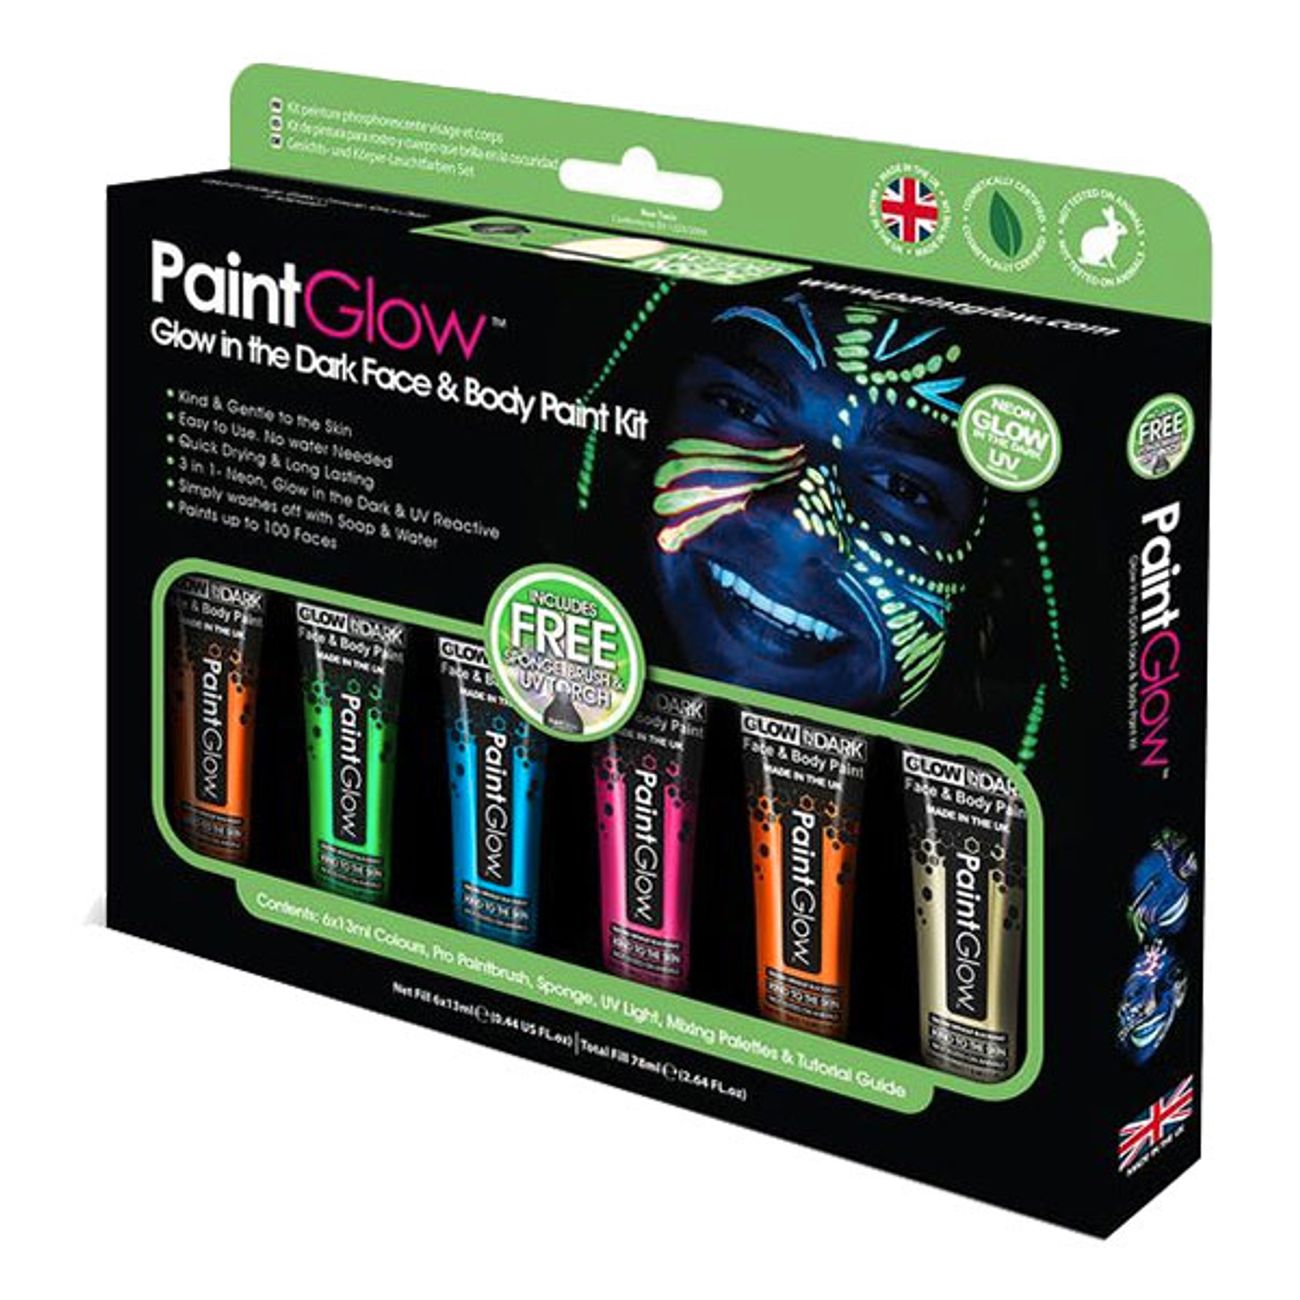 paintglow-glow-in-the-dark-body-paint-kit-1